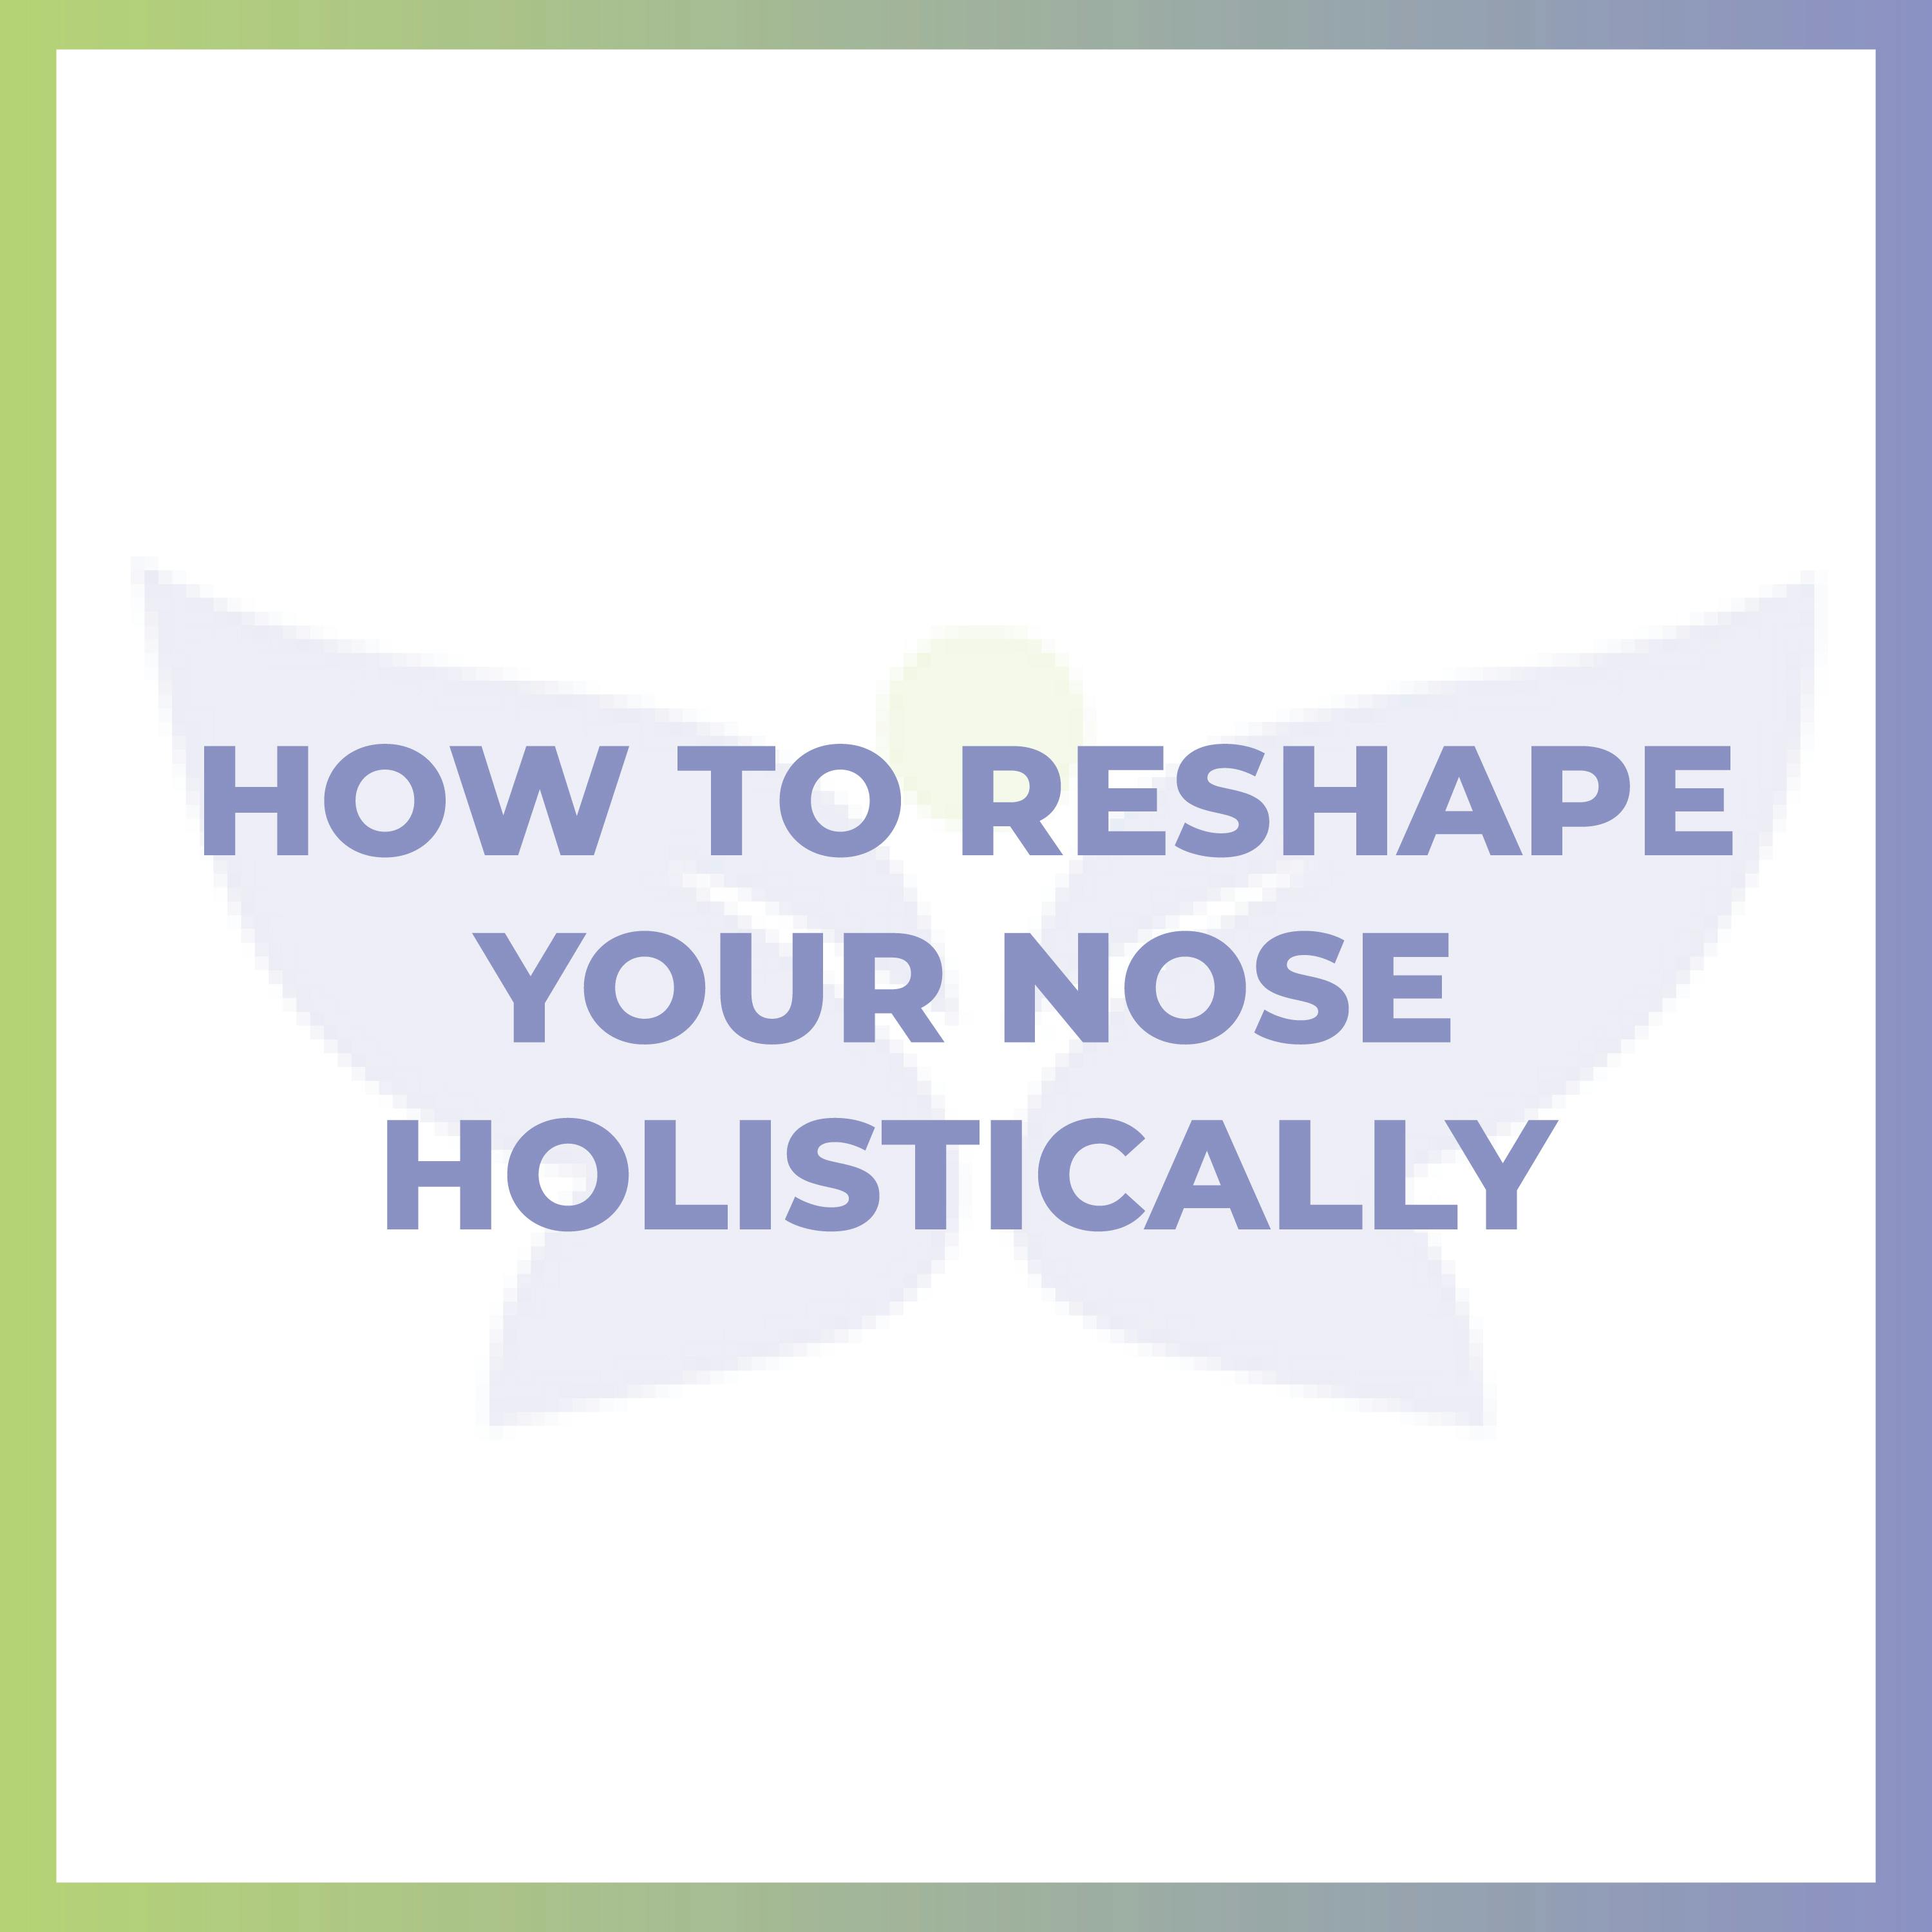 How to Reshape Your Nose Holistically